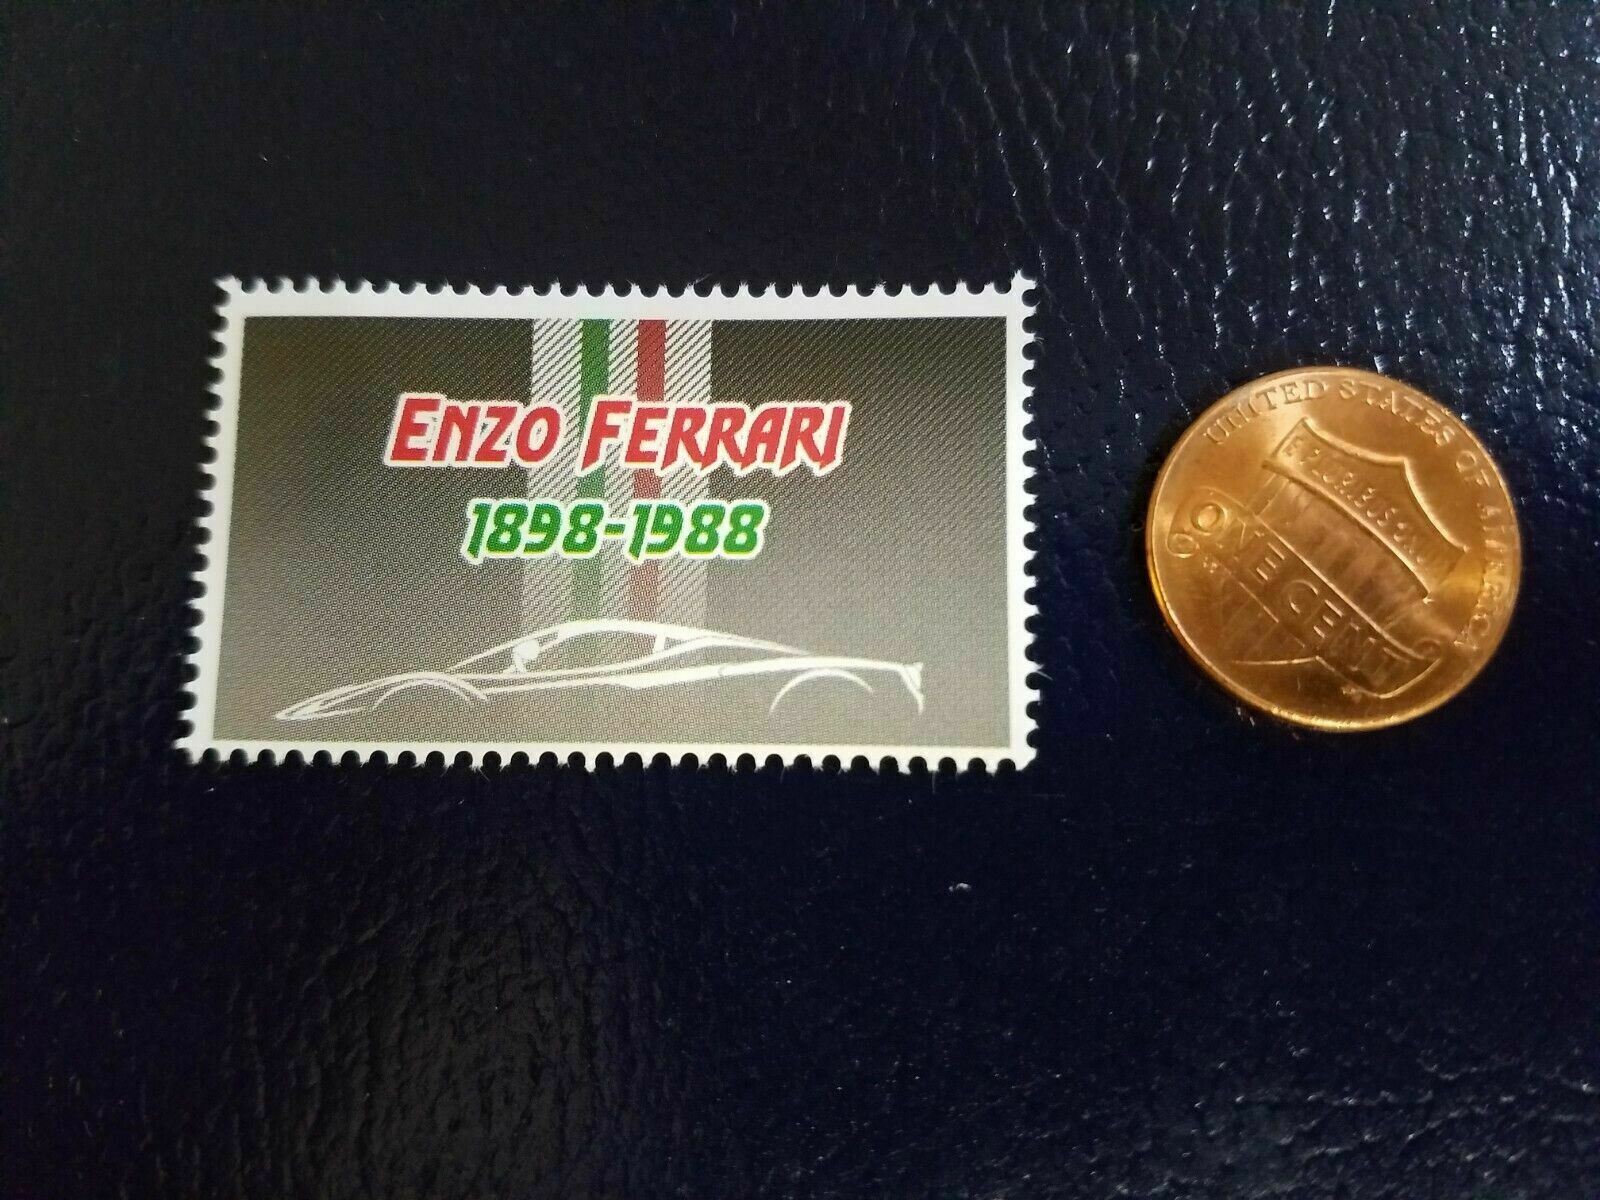 Enzo Ferrari Race Car Driver 2018 Republique Du Congo Perforated Stamp (c)